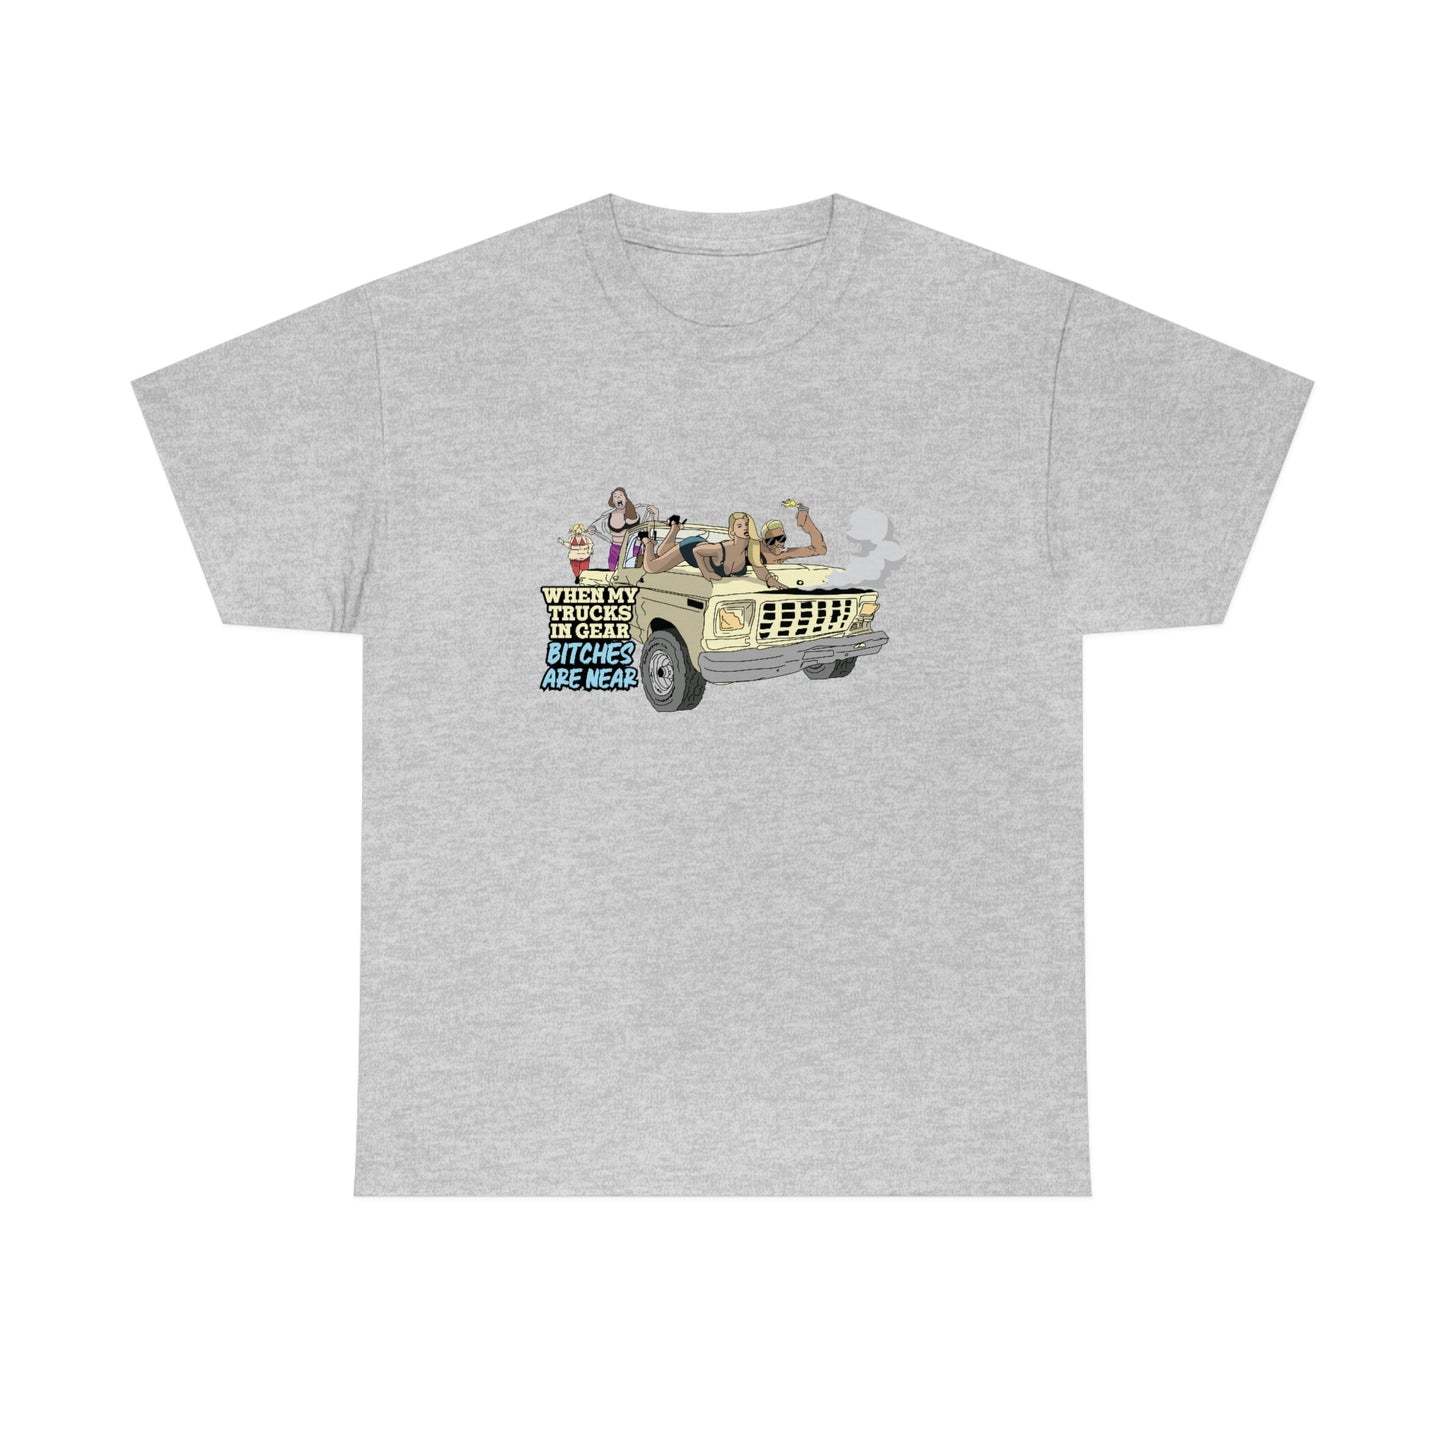 Trucks In Gear Bitches Are Near T-Shirt